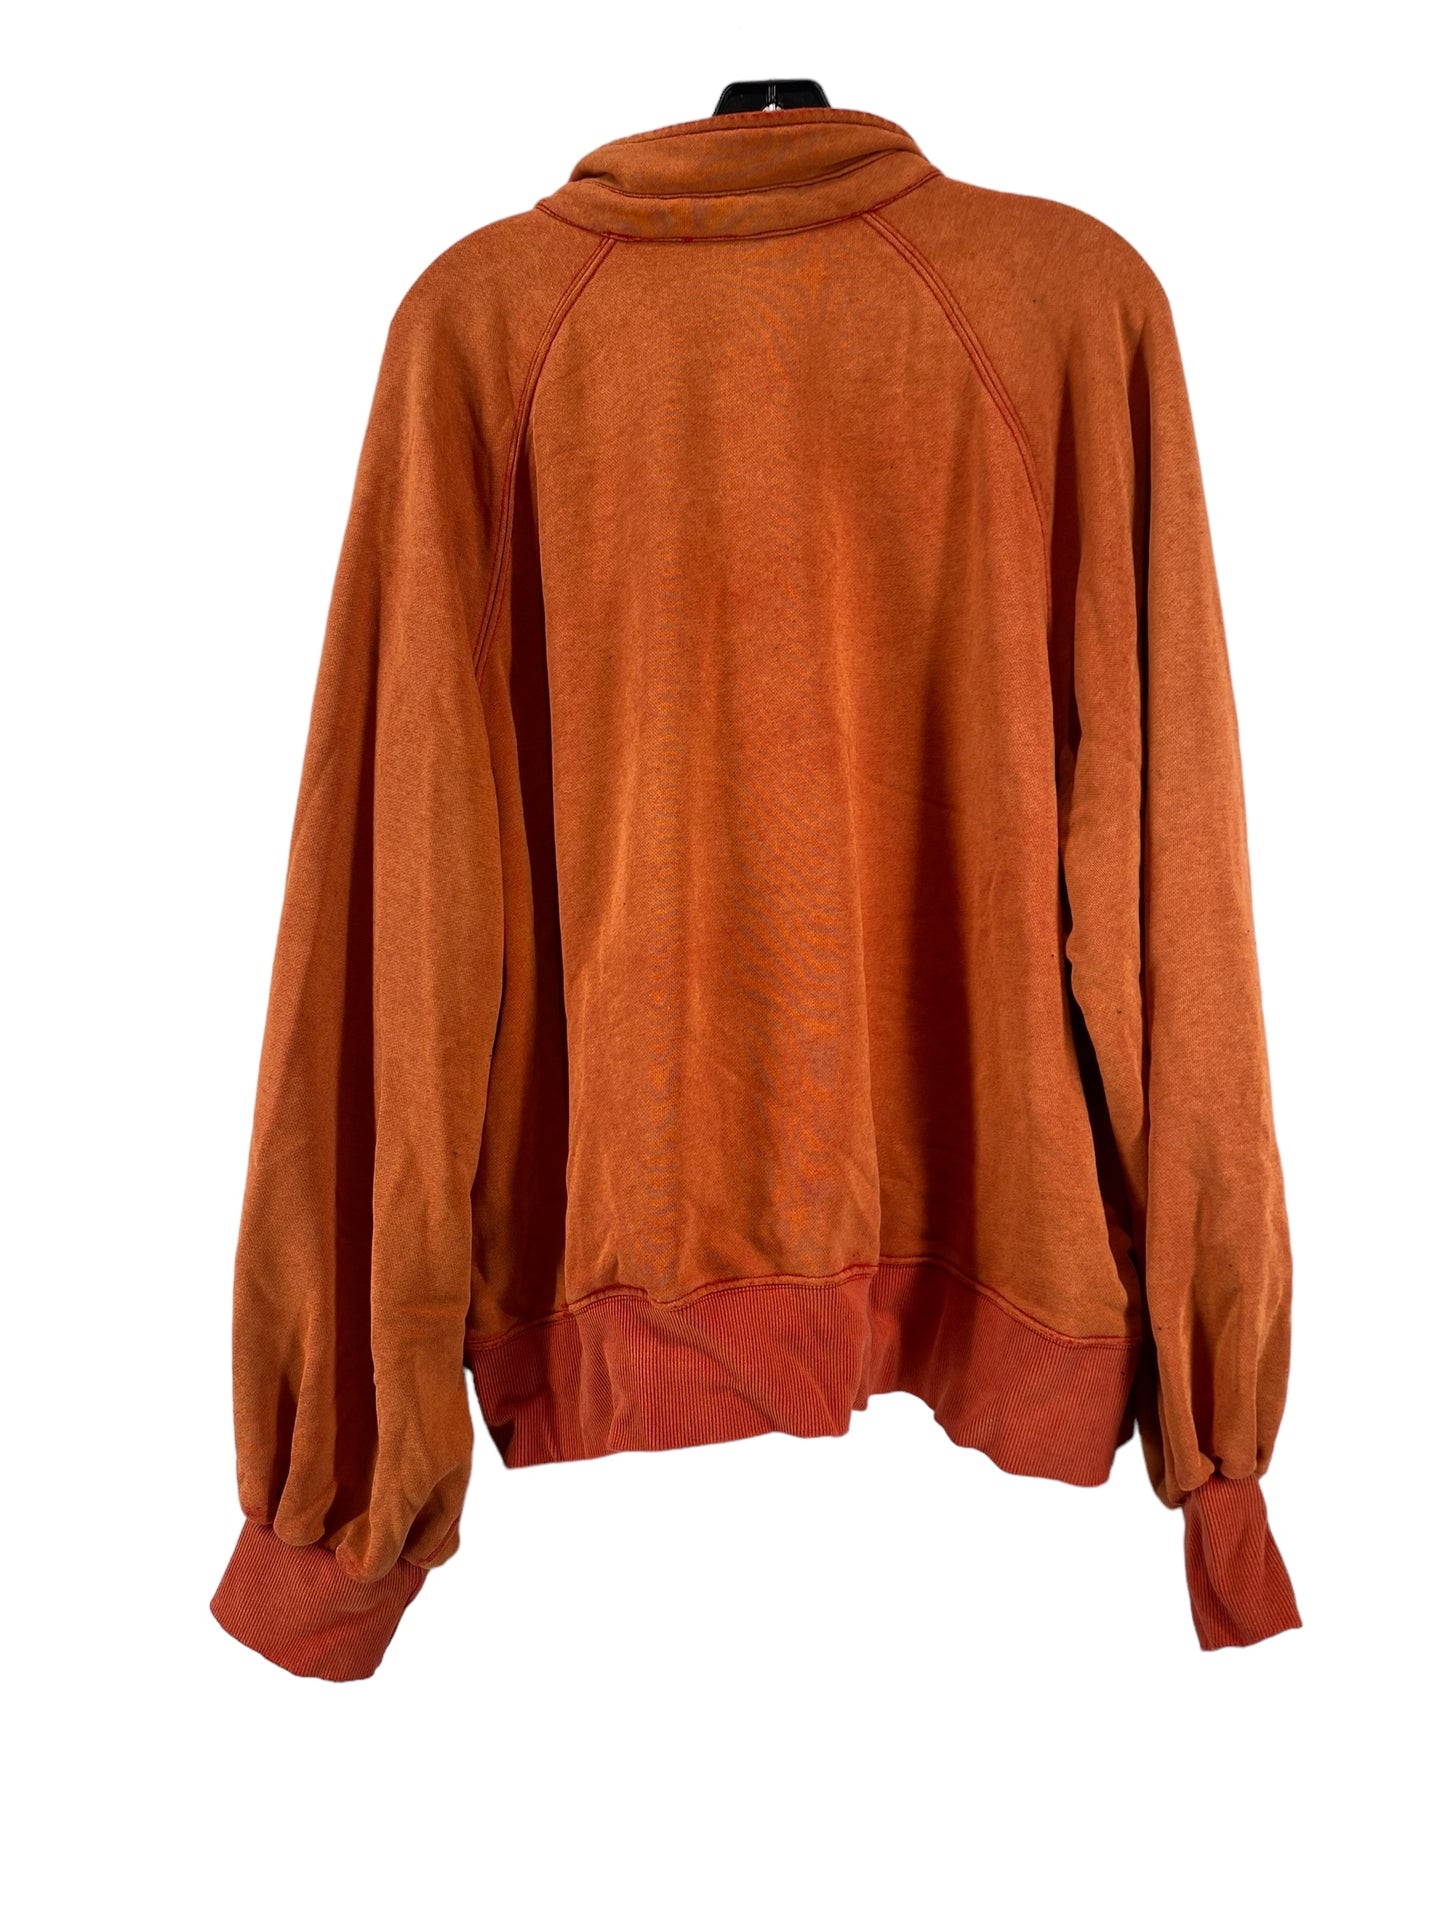 Orange Sweatshirt Collar Clothes Mentor, Size Xl